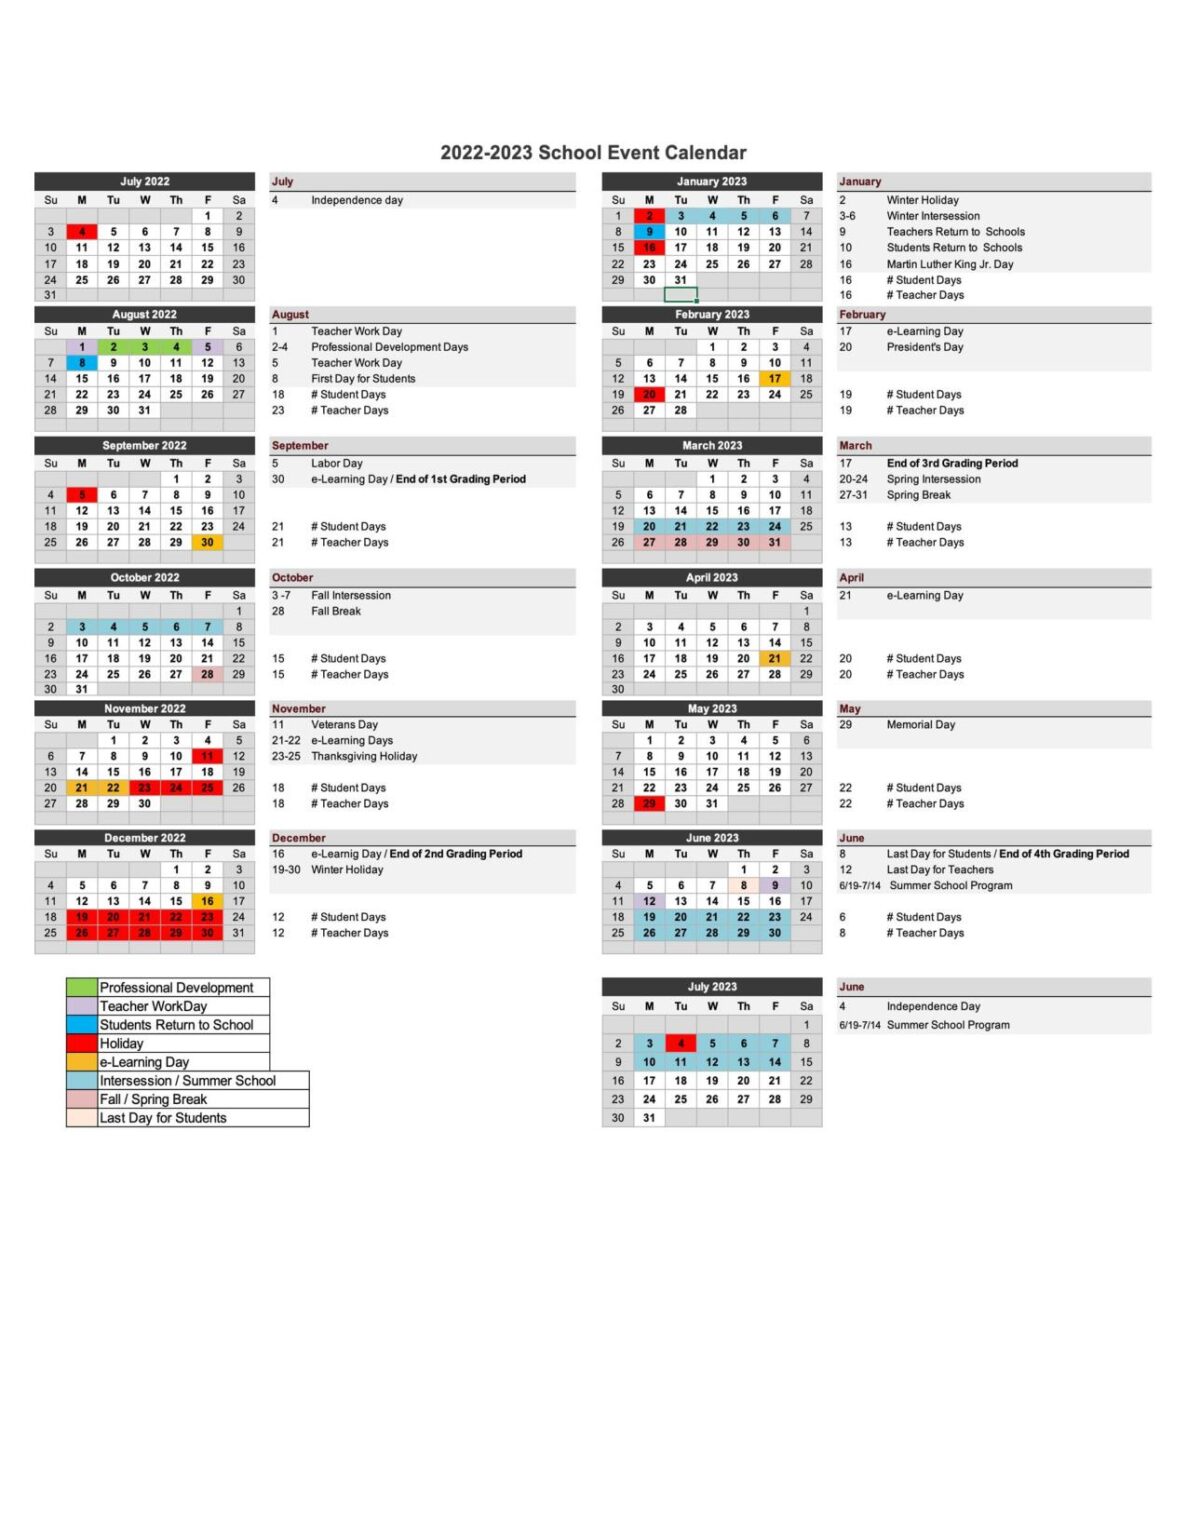 Glenpool Schools Calendar - Rania Catarina